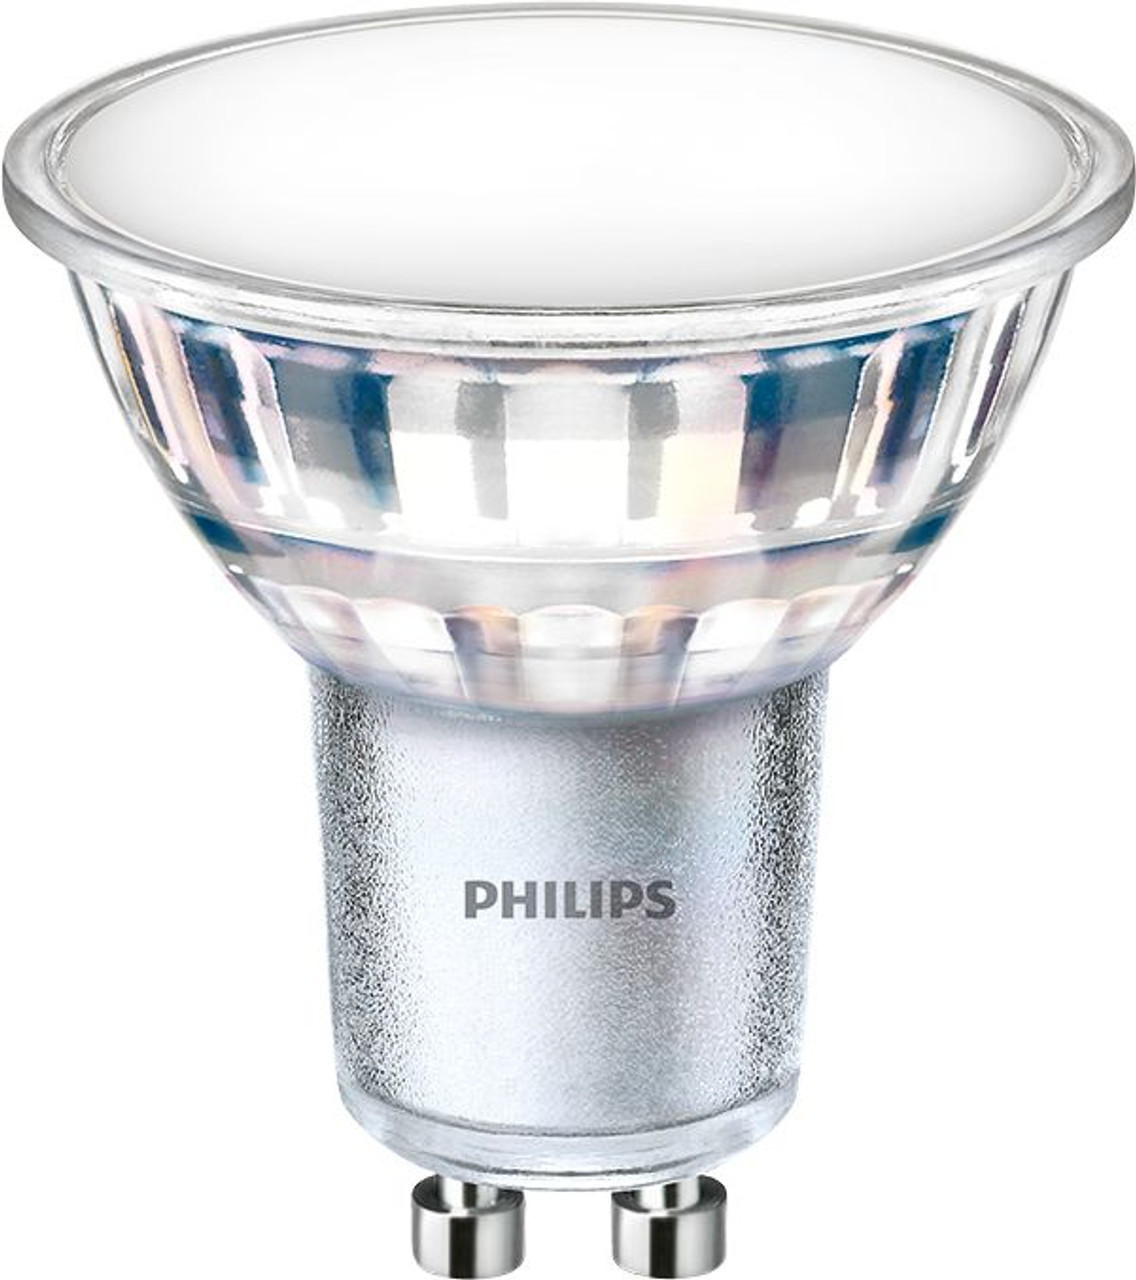 Philips Lighting LEDspot 550lm GU10 865 120D LED Spots